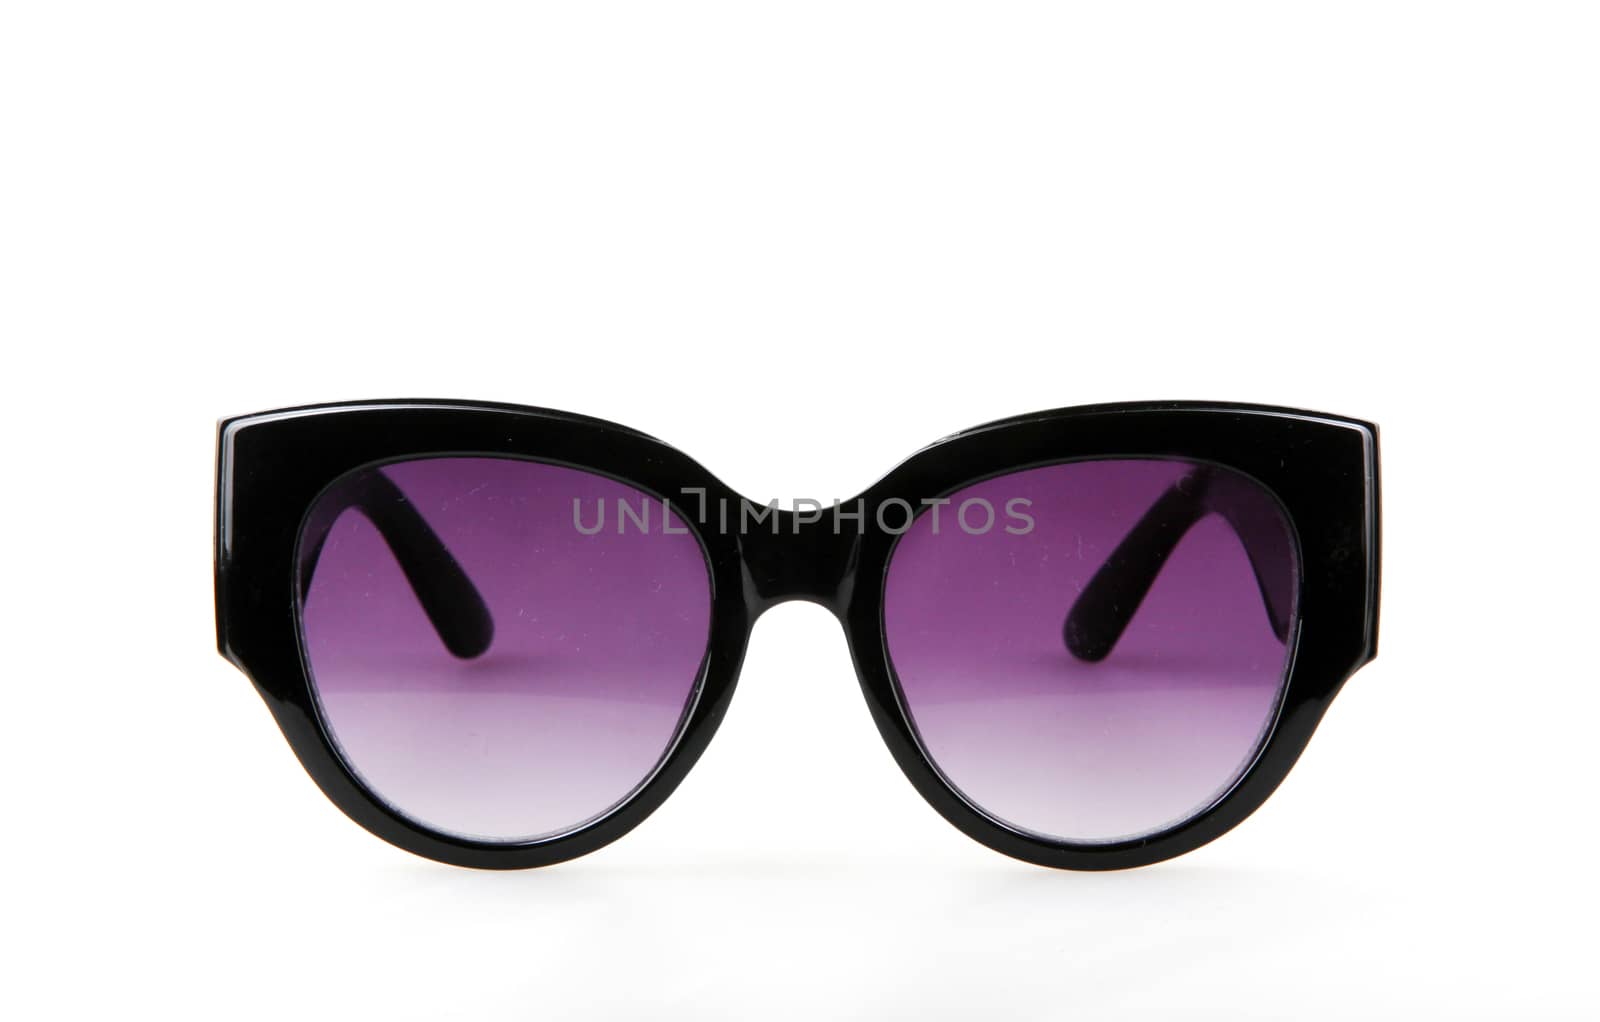 Stylish Sunglasses Against White Background by nenovbrothers